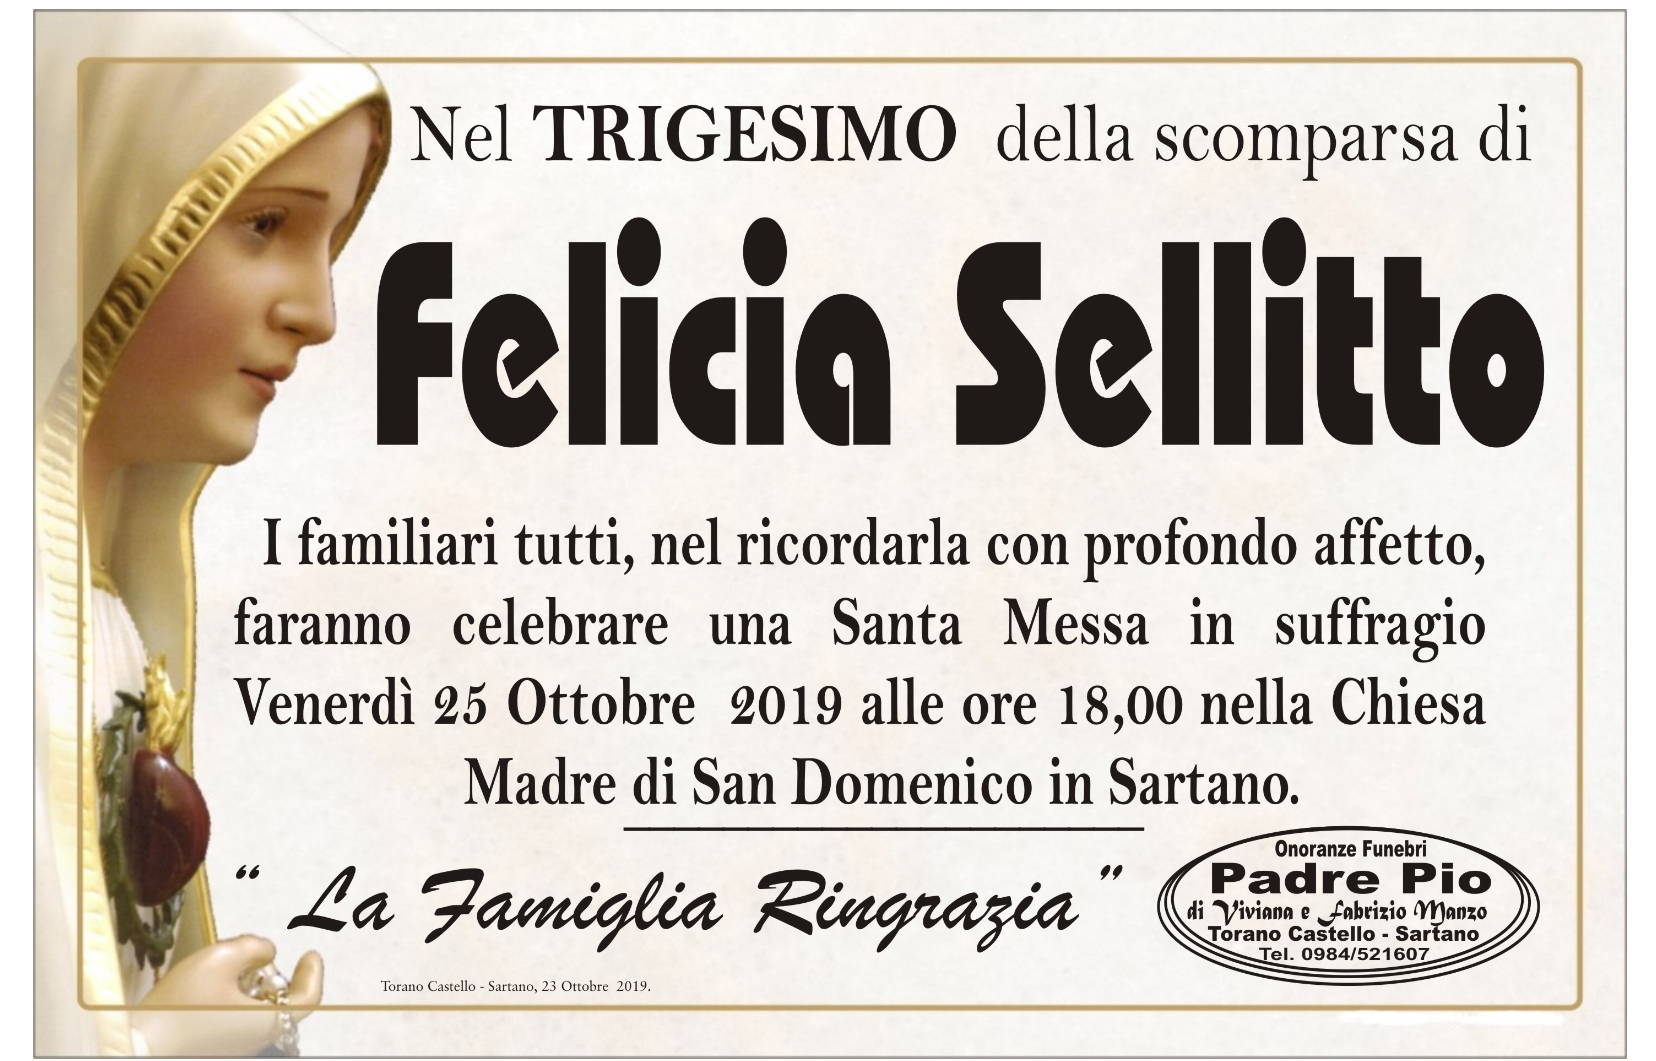 Felicia Sellitto